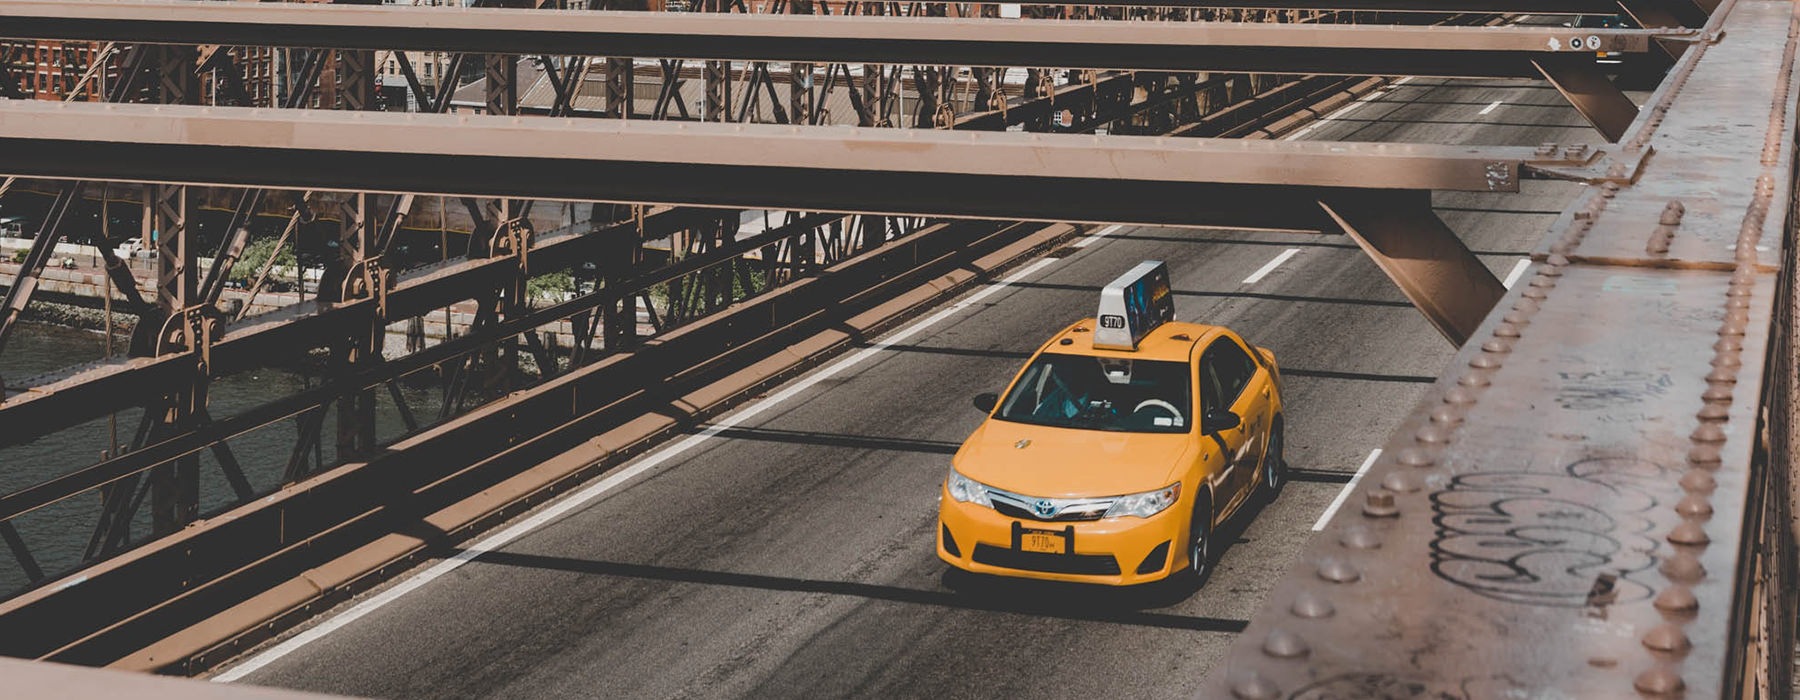 taxi driving on bridge